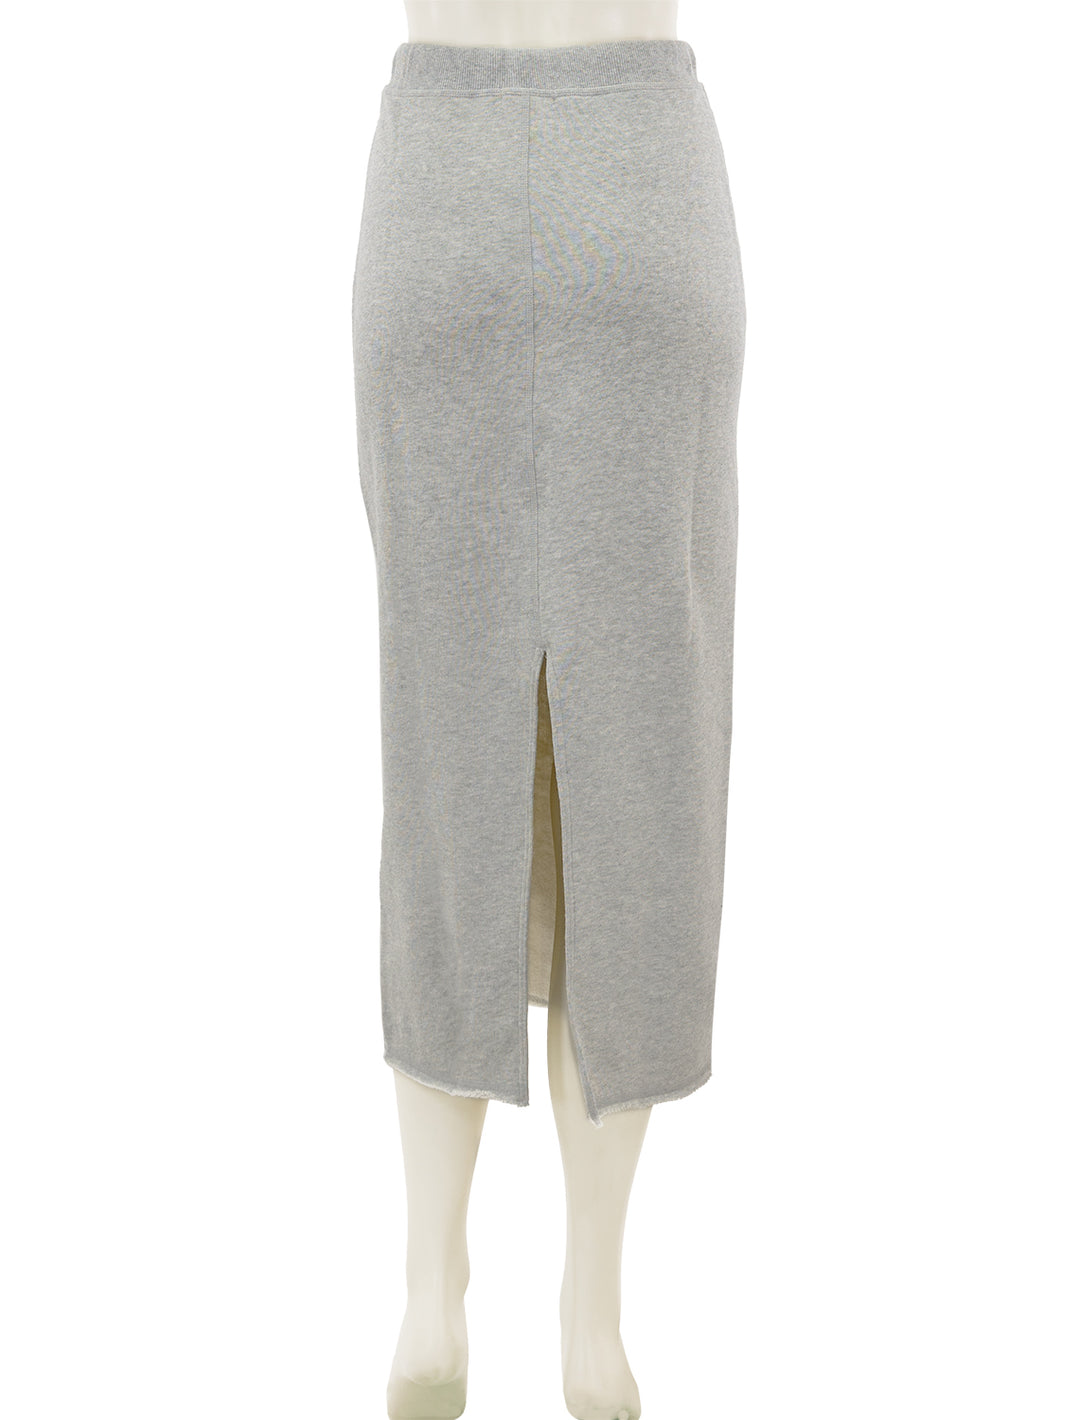 Back view of Rag & Bone's vintage terry midi skirt in heather grey.